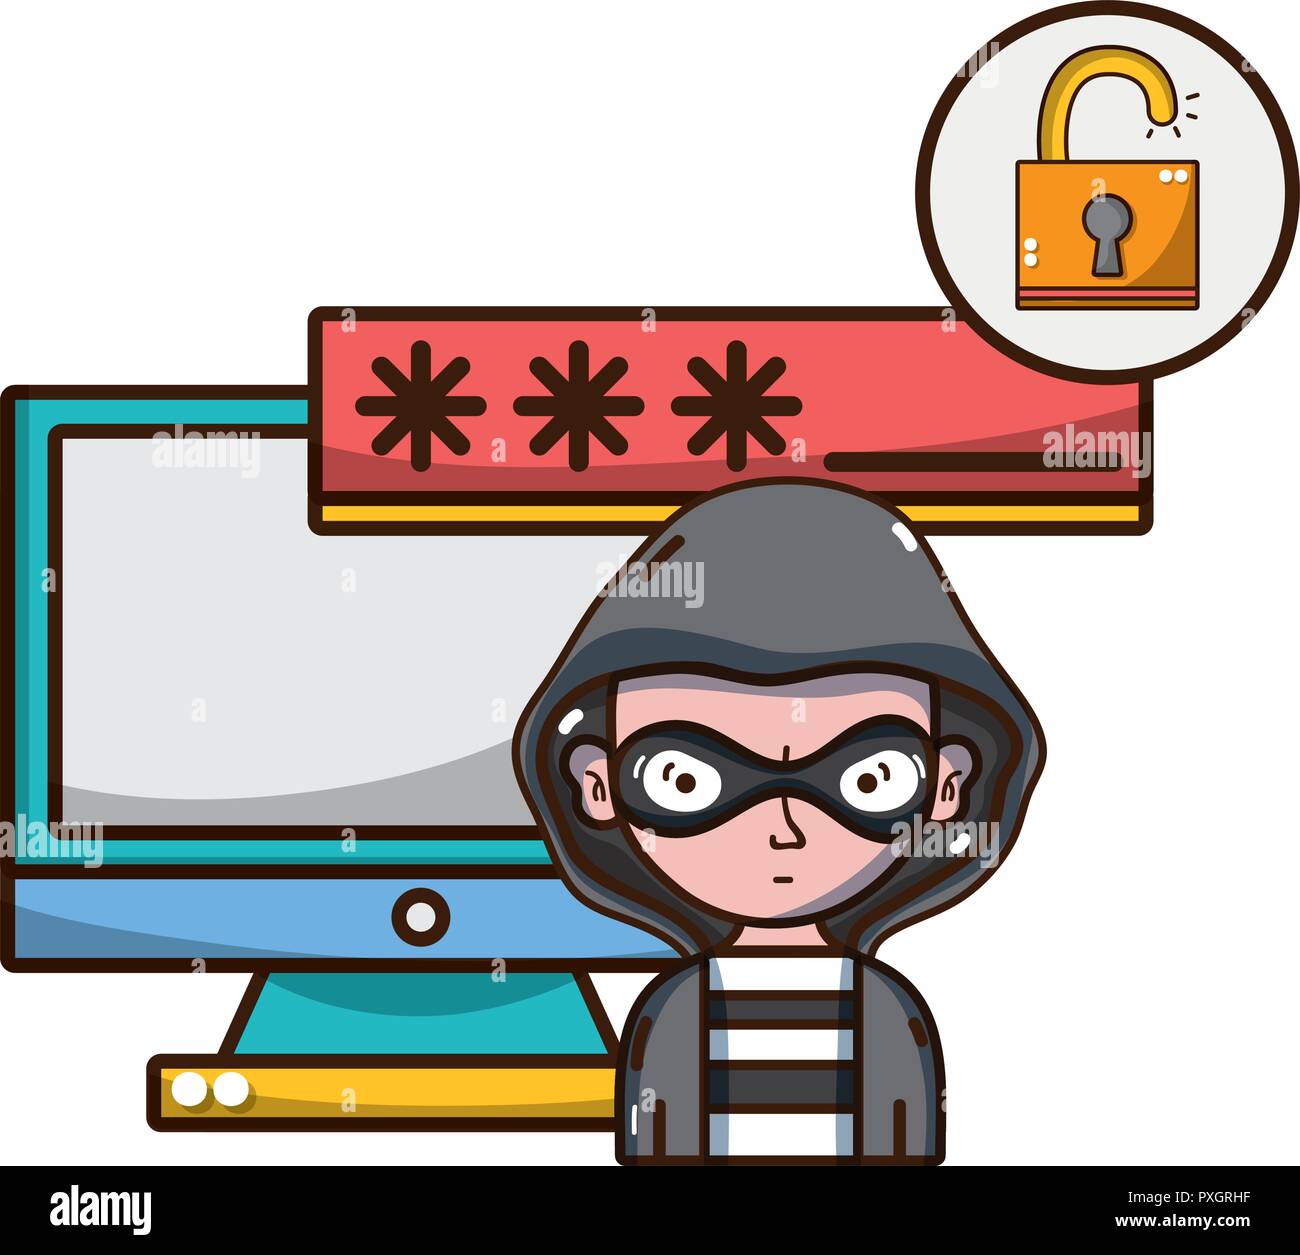 cybersecurity threat cartoon Stock Vector